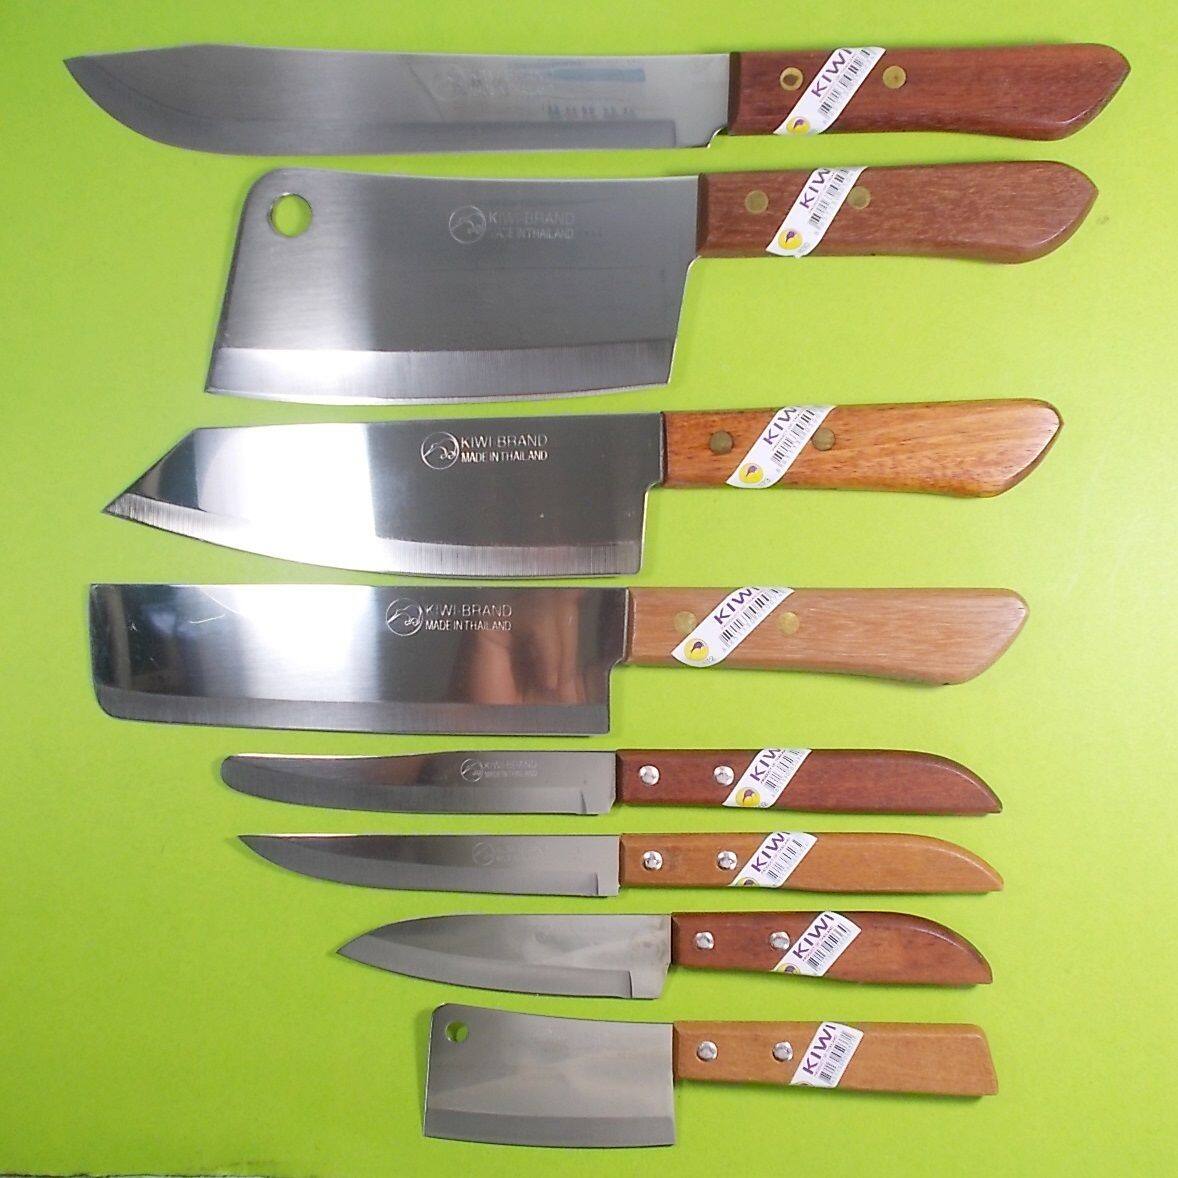 Kiwi มีดทำครัวชุด 8 อัน 504 503 501 502 172 173 830 248 ใบมีดคมทำด้วยสแตนเลส ด้ามไม้ หั่น สับ มีดปังตอ มีดปอกทุเรียน กีวี Knife Knives set Stainless steel Wood Handle set 8 pcs